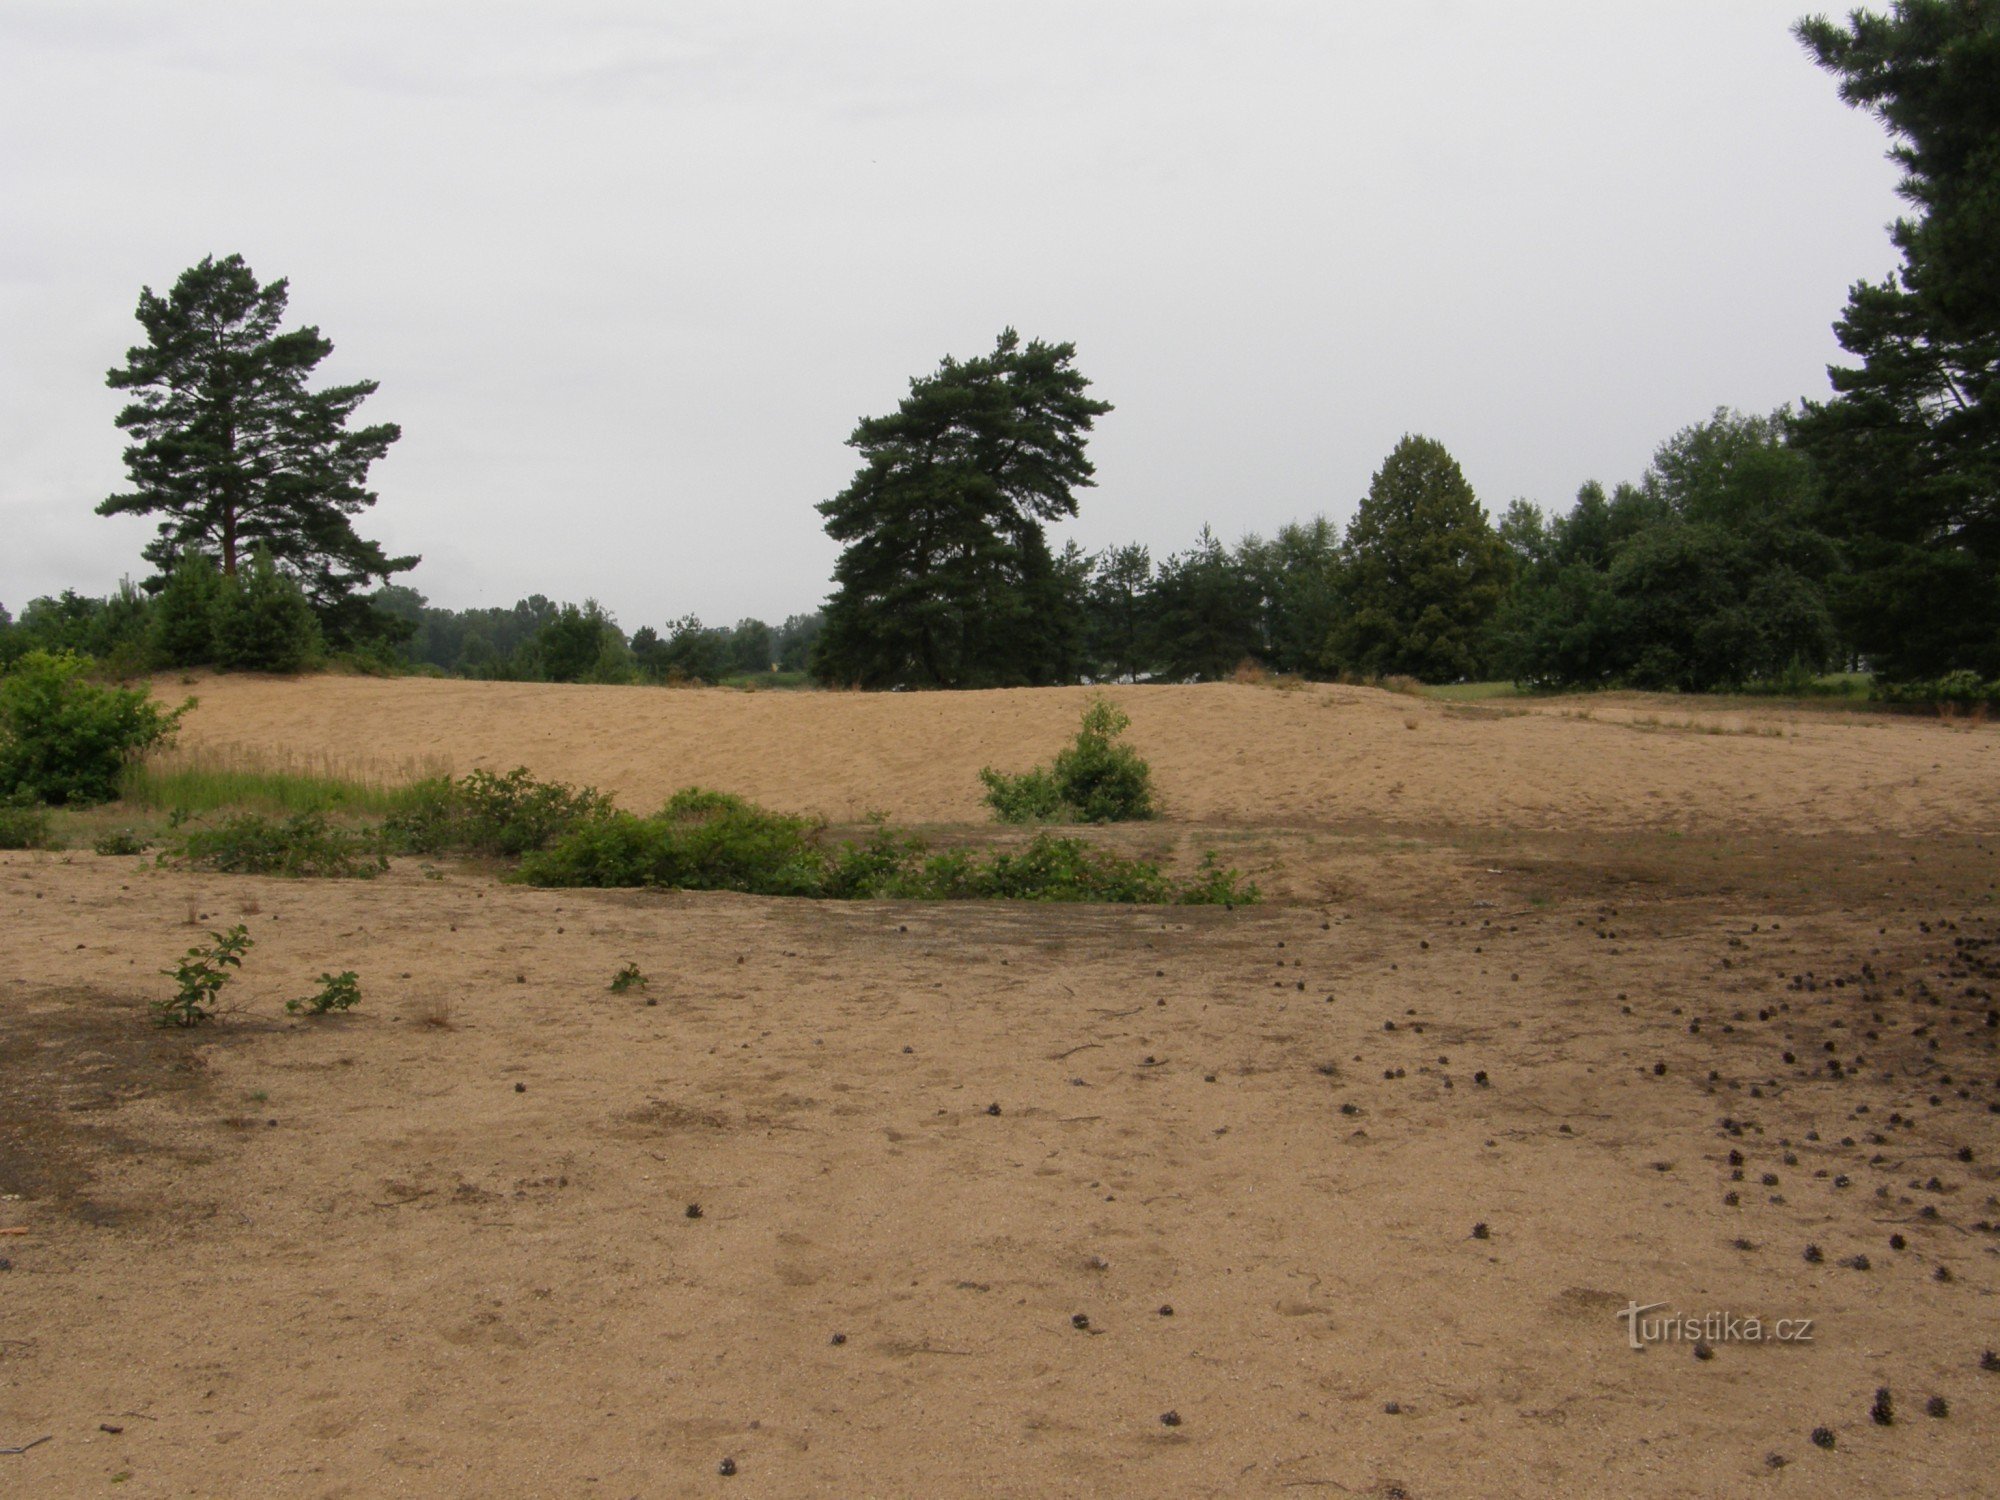 Sand spill near Vlkov